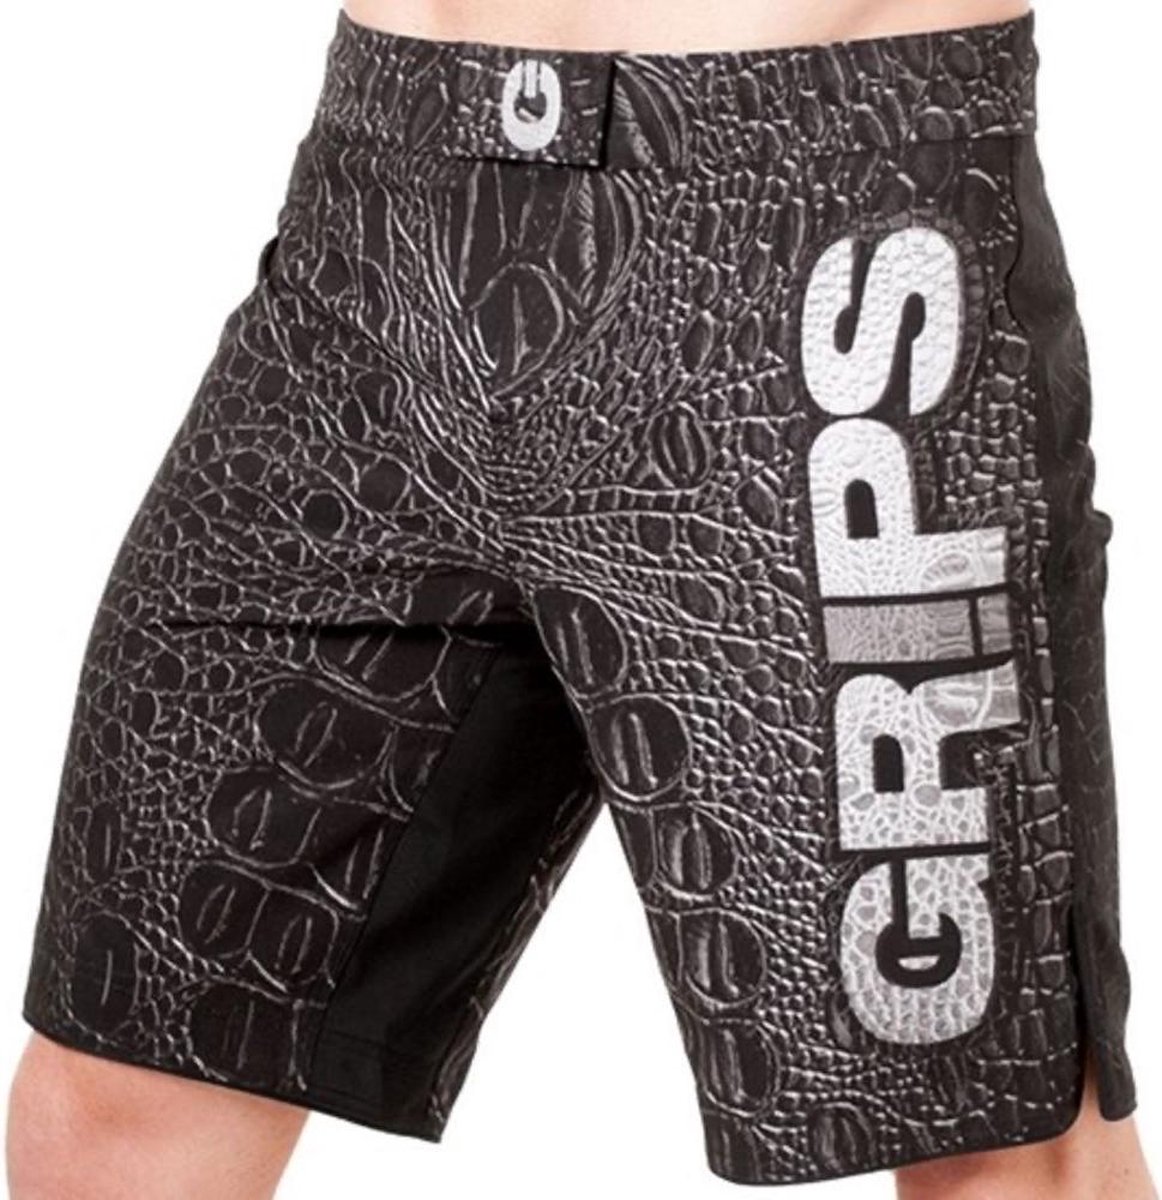 GRIPS Crocodile MMA / BJJ Fight Shorts S - Jeans Maat 30